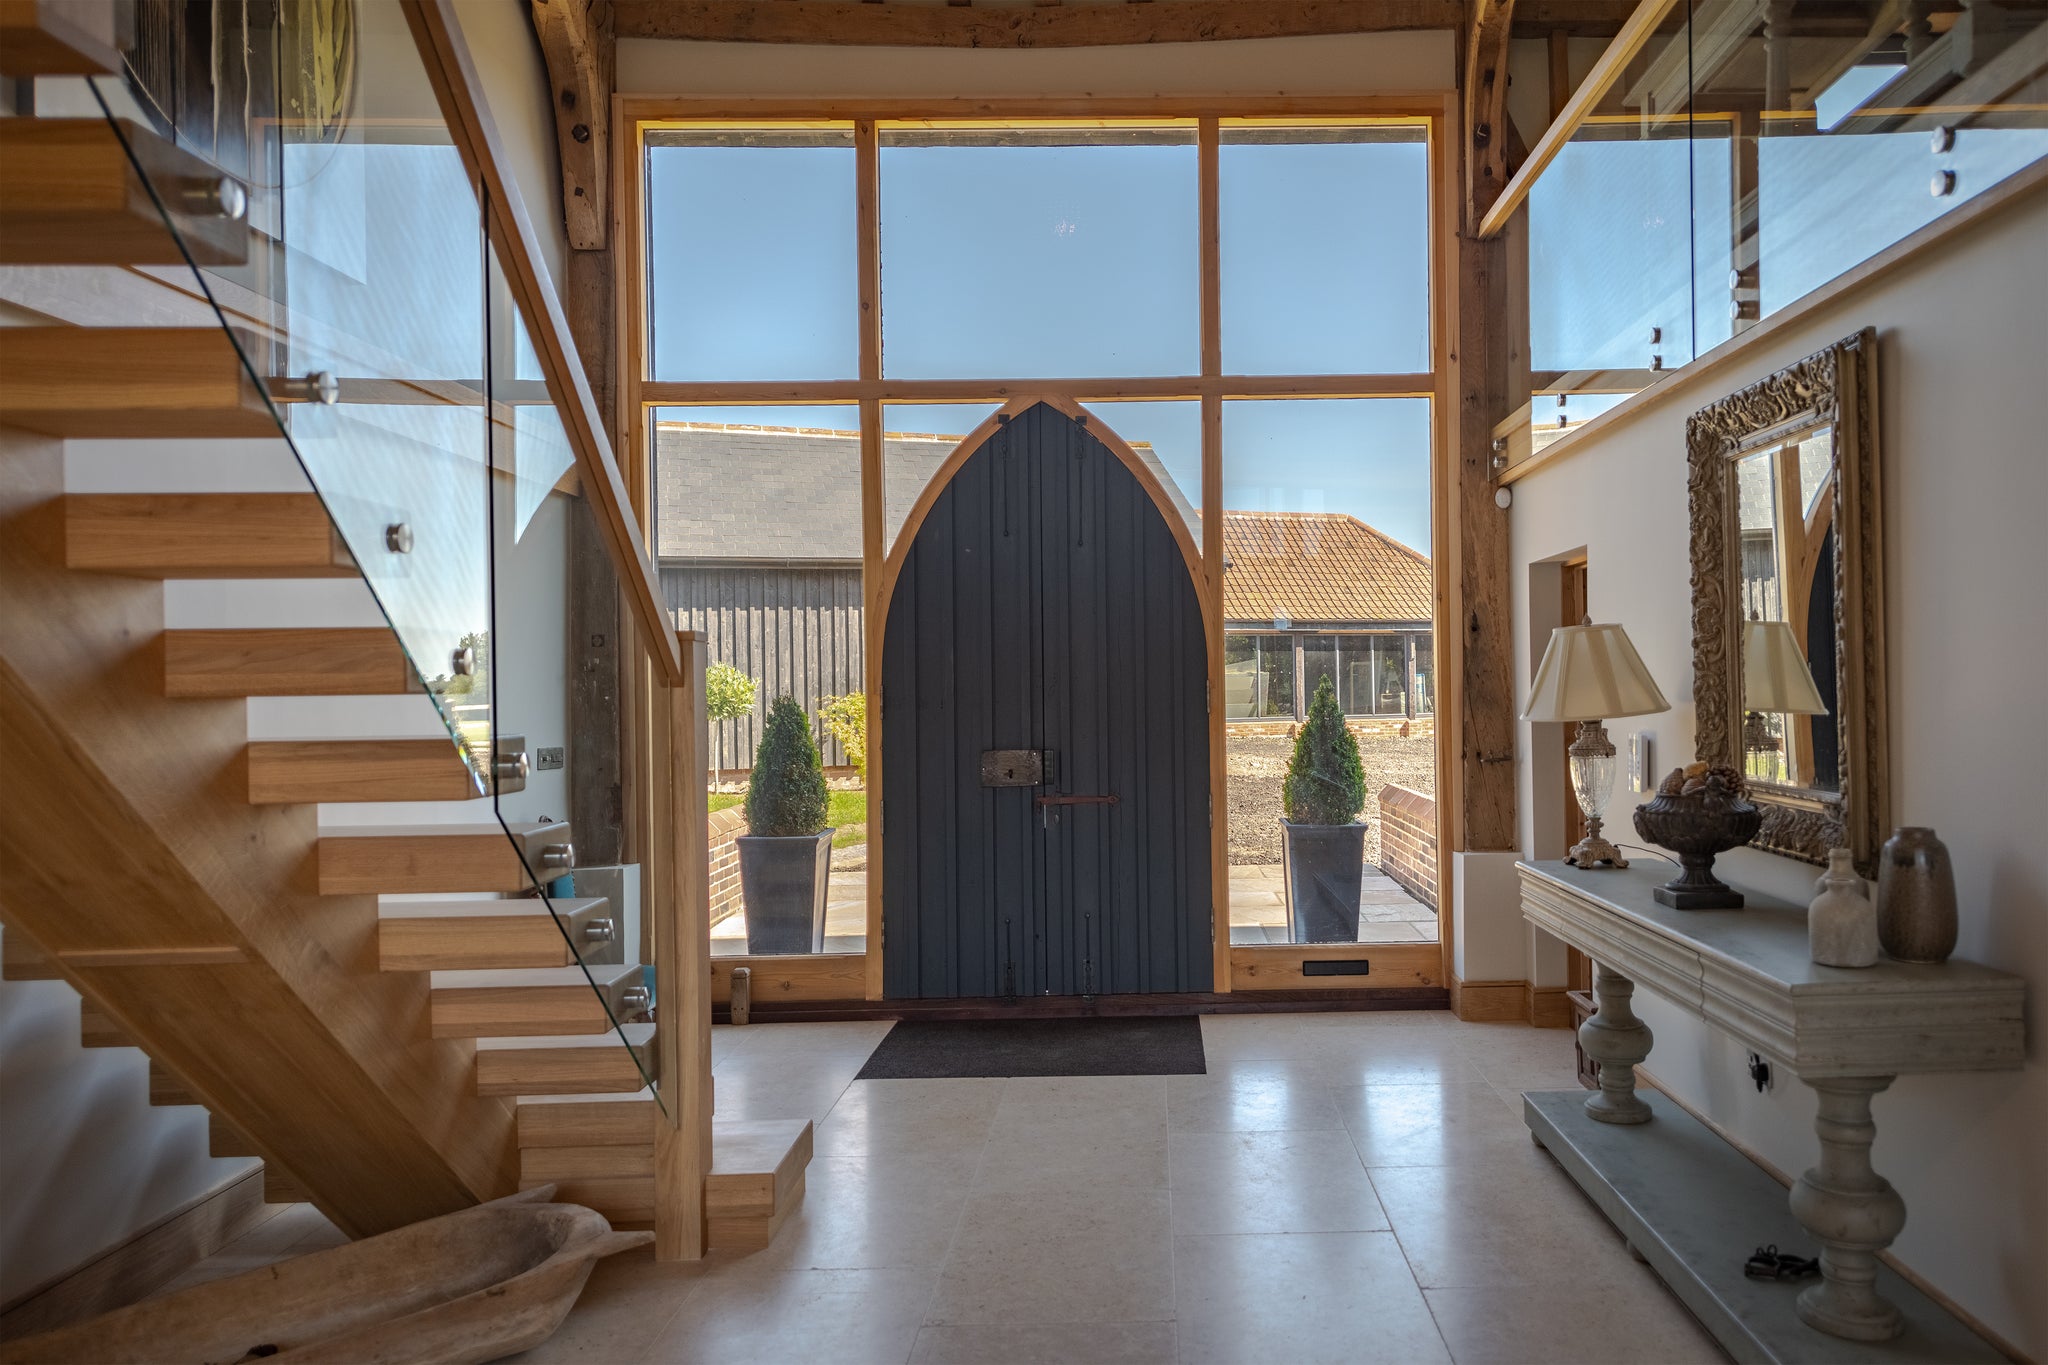 Suffolk Barn Conversion - Inspiring Home Design (Part II)